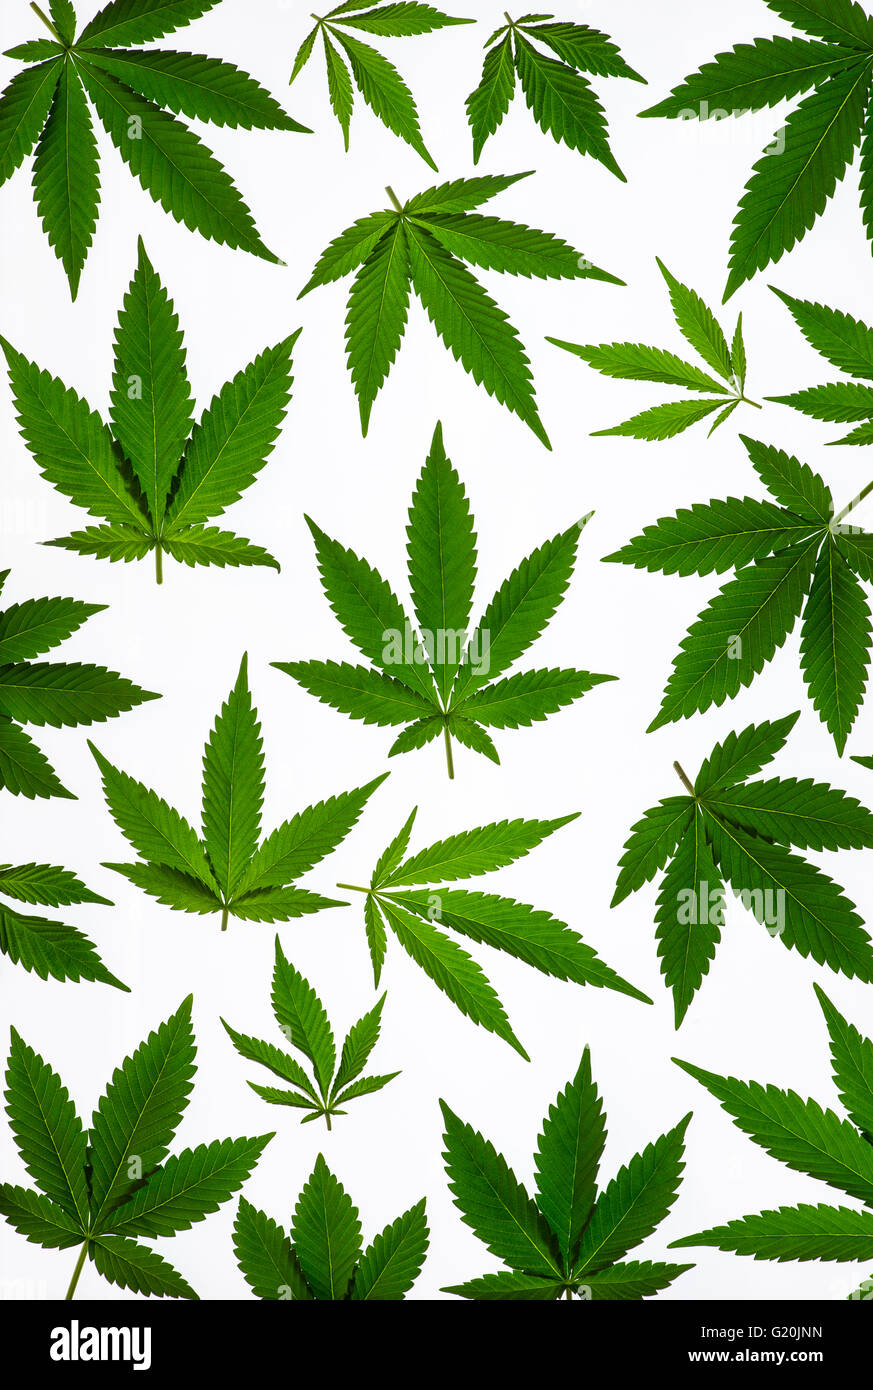 Cannabis sativa plant leaves on white background Stock Photo